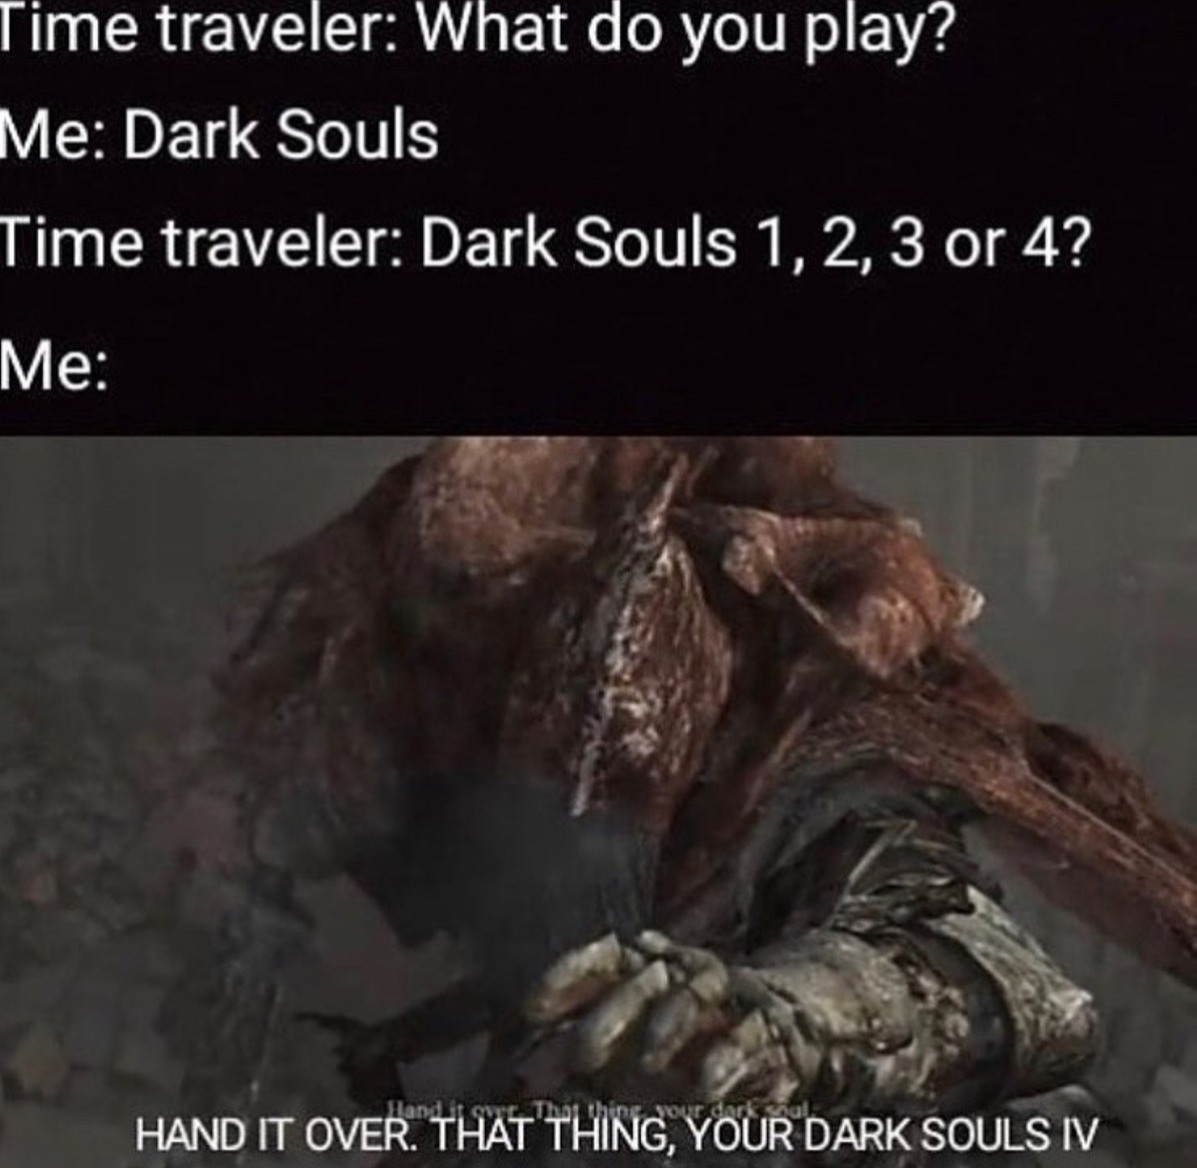 Dark souls 5 - meme